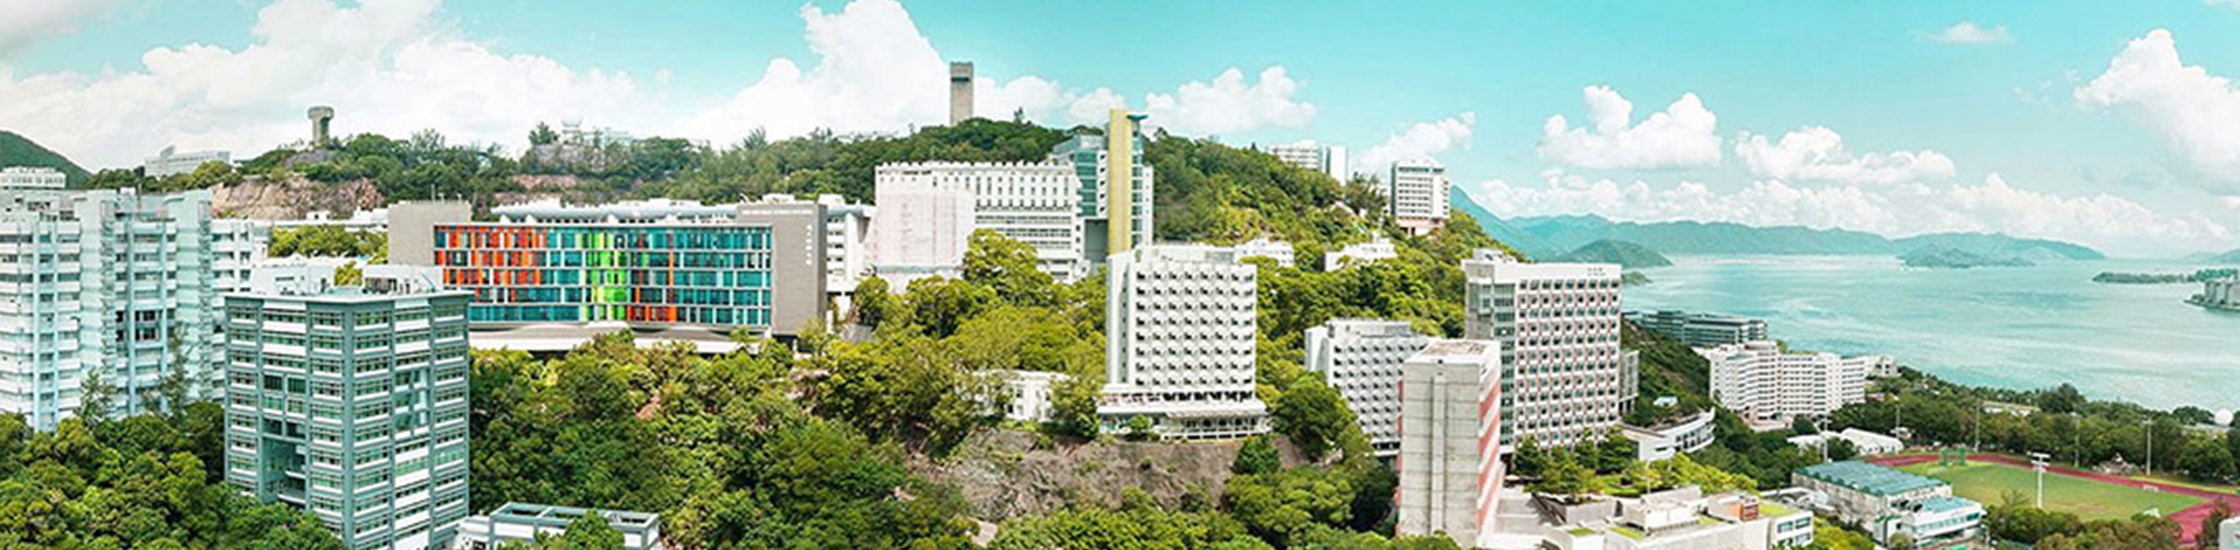 The Chinese University of Hong Kong Campus